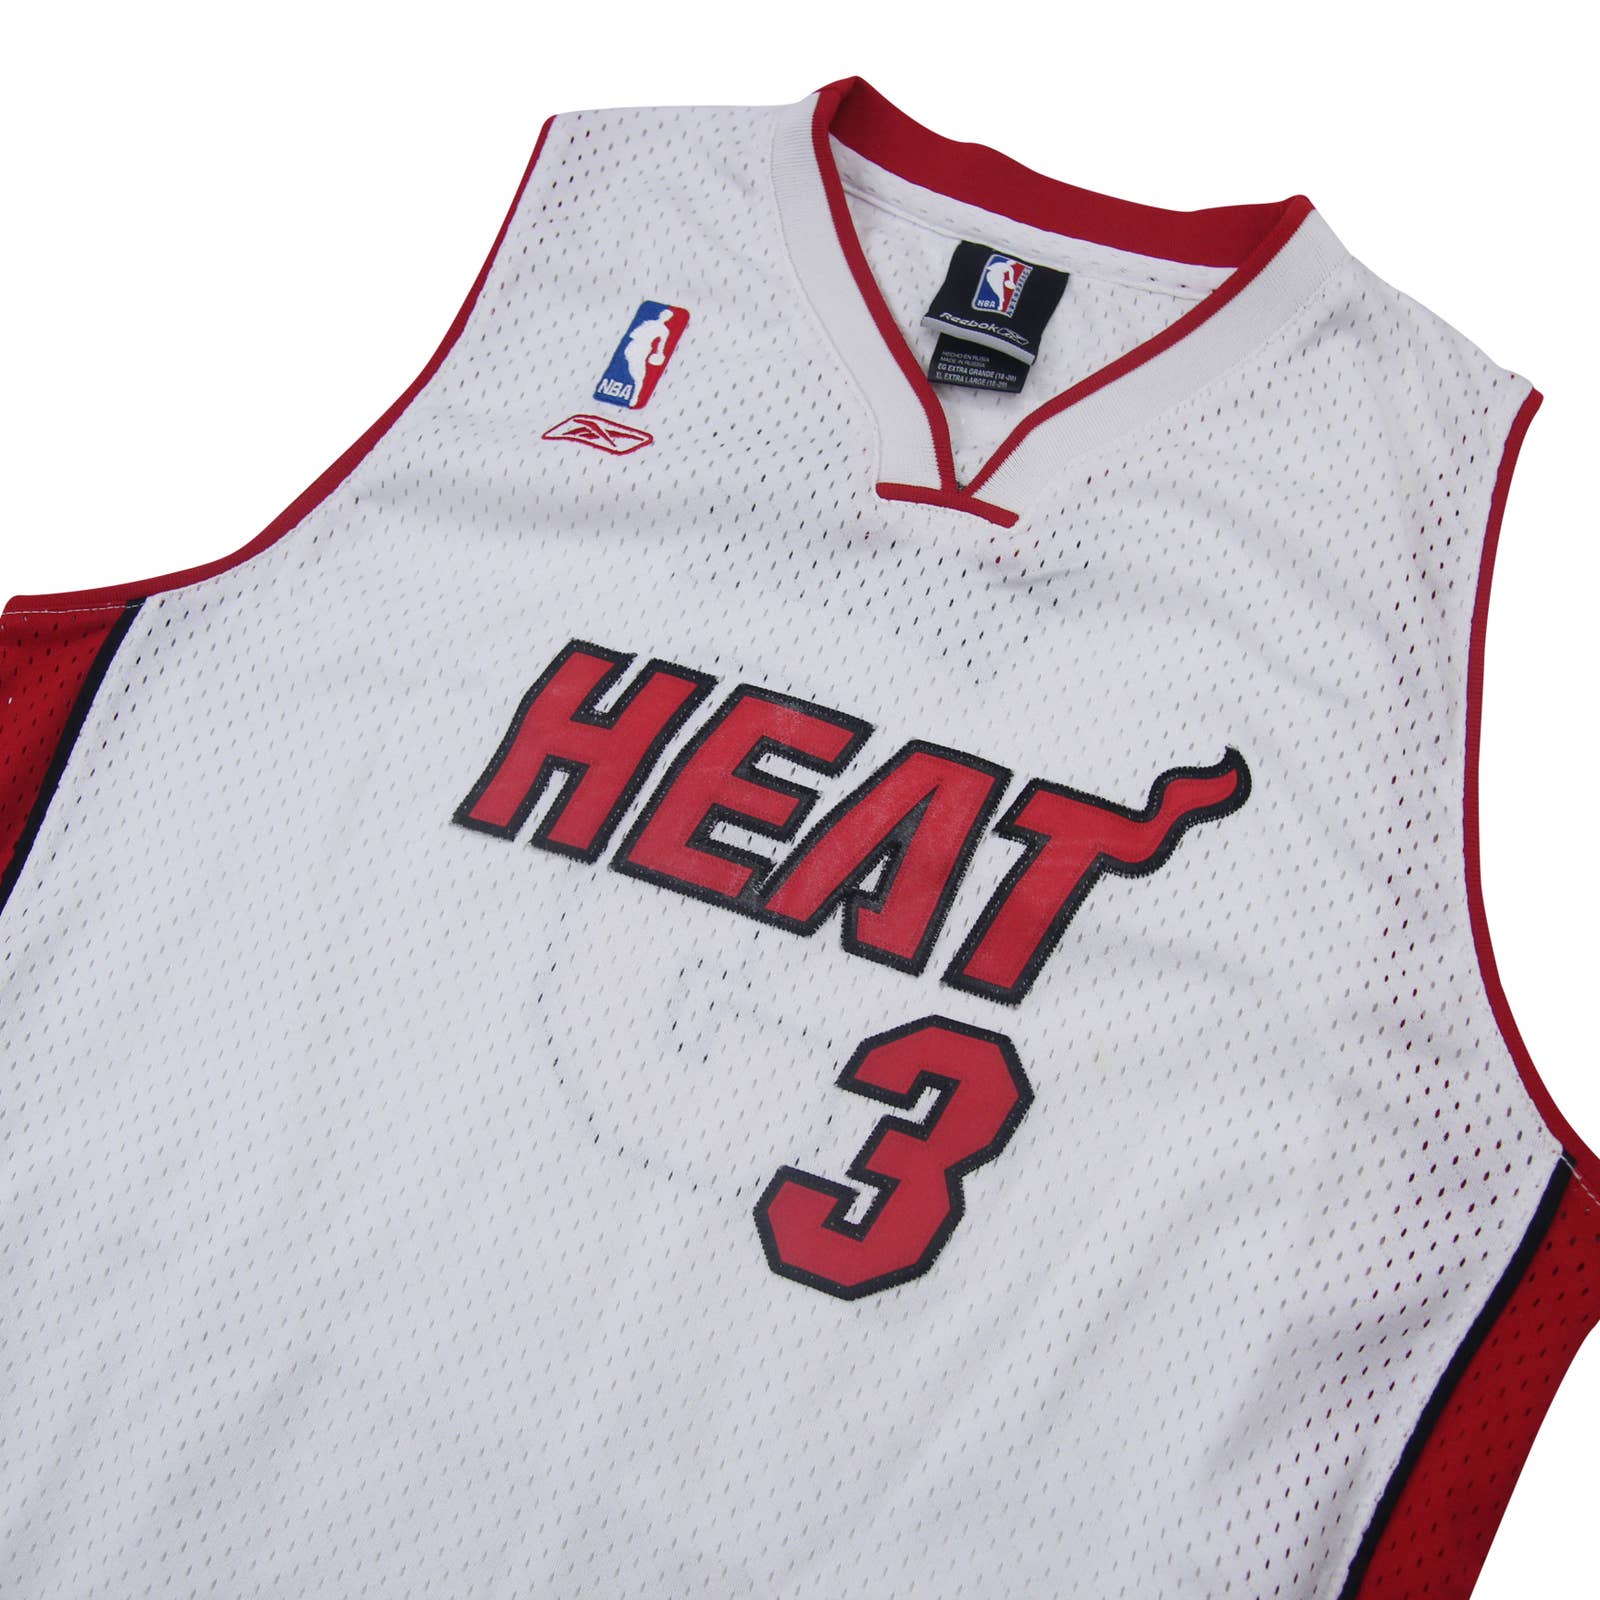 Dwayne Wade #3 Miami Heat Jersey 